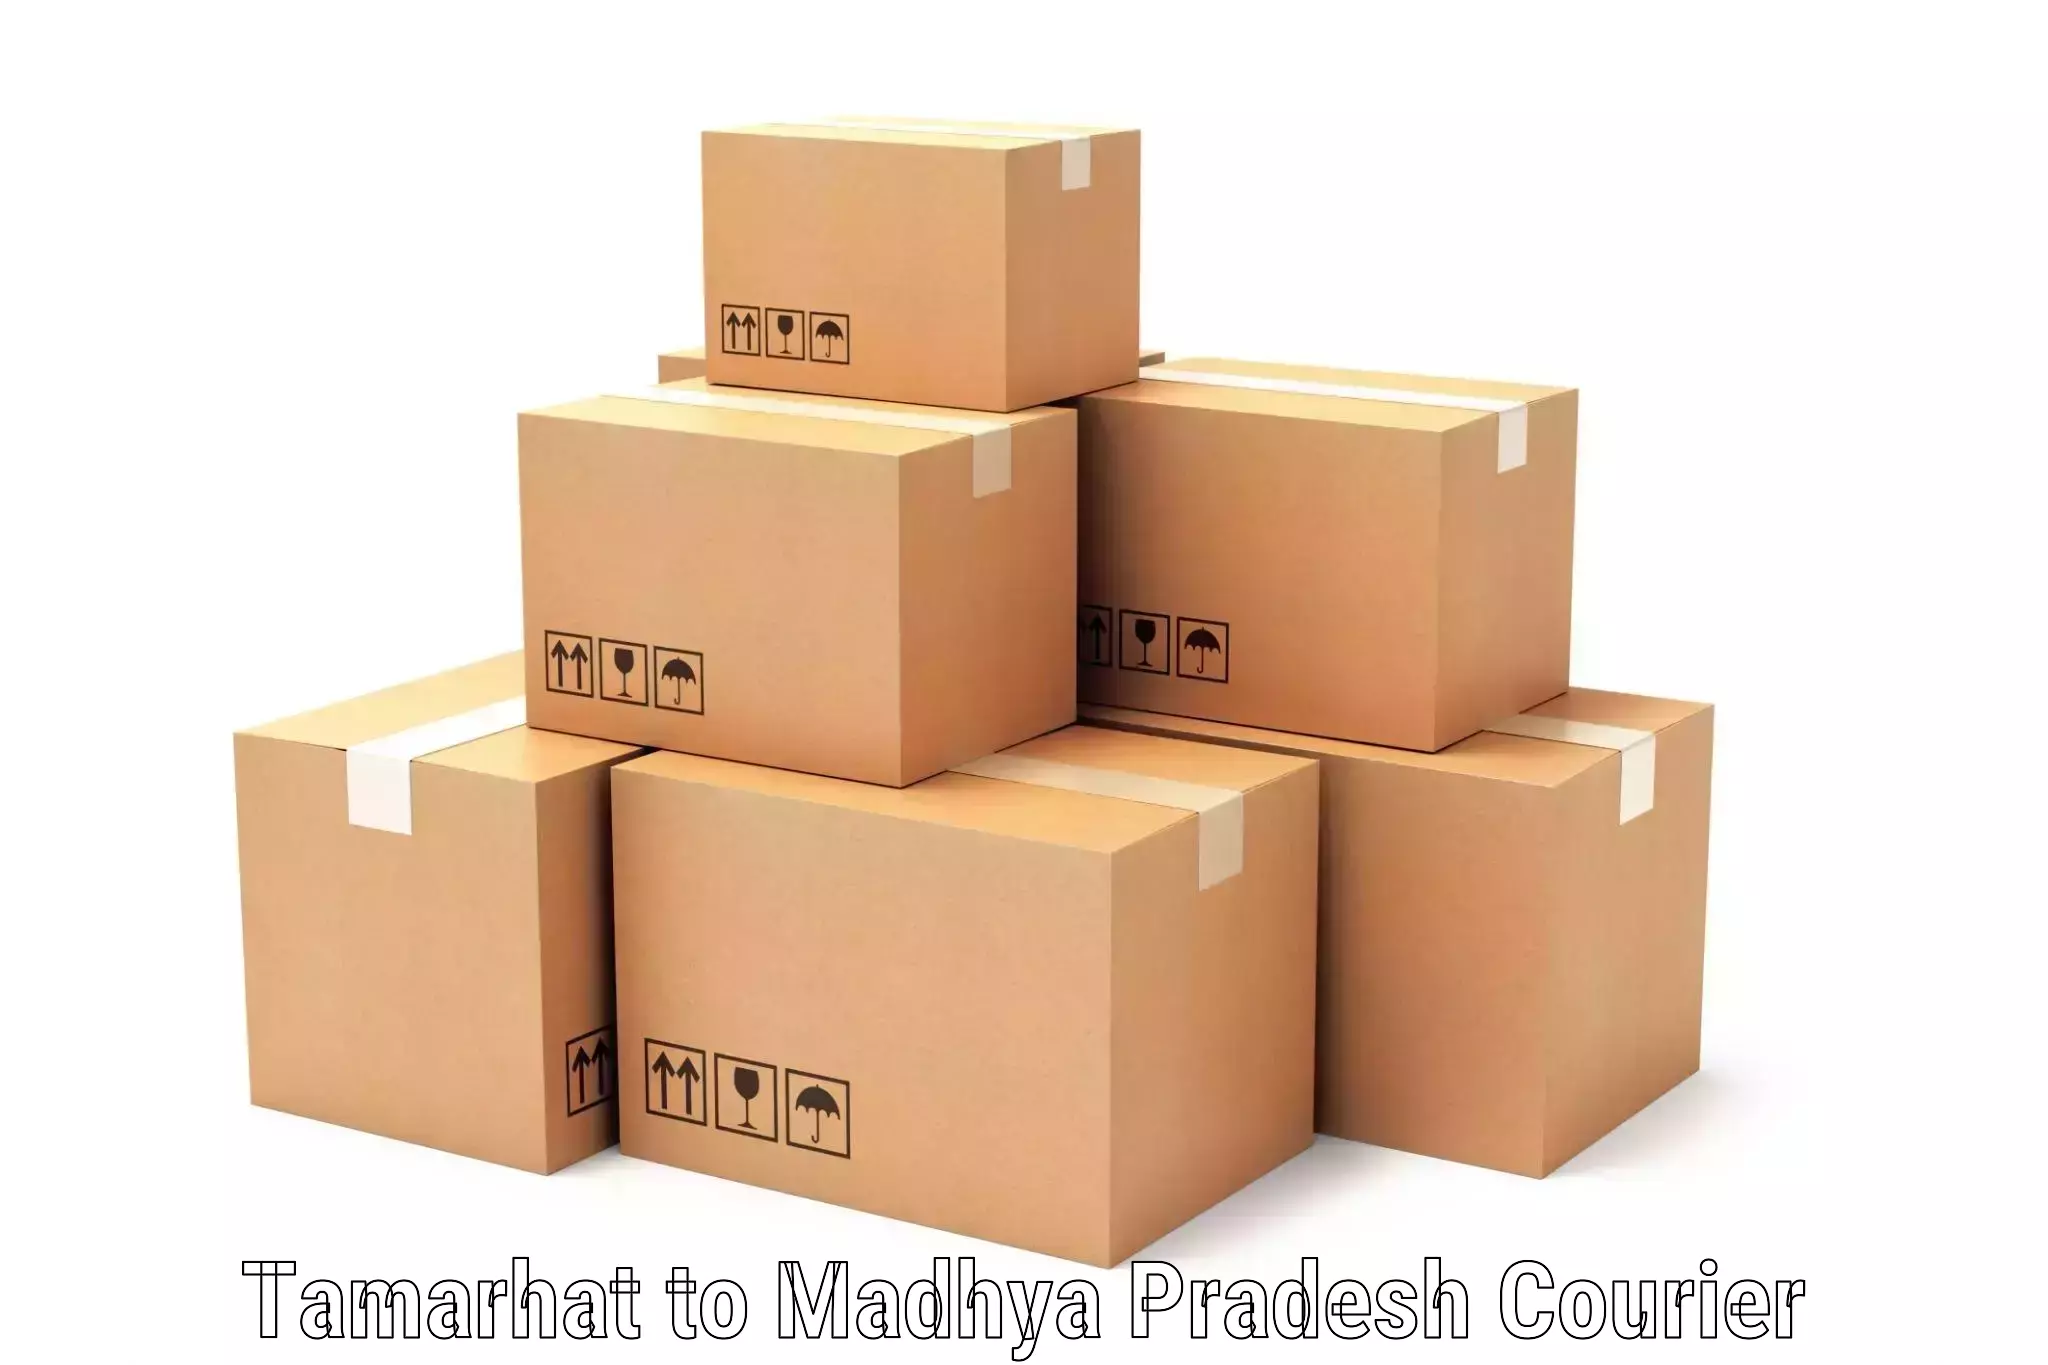 Fast shipping solutions Tamarhat to Guna